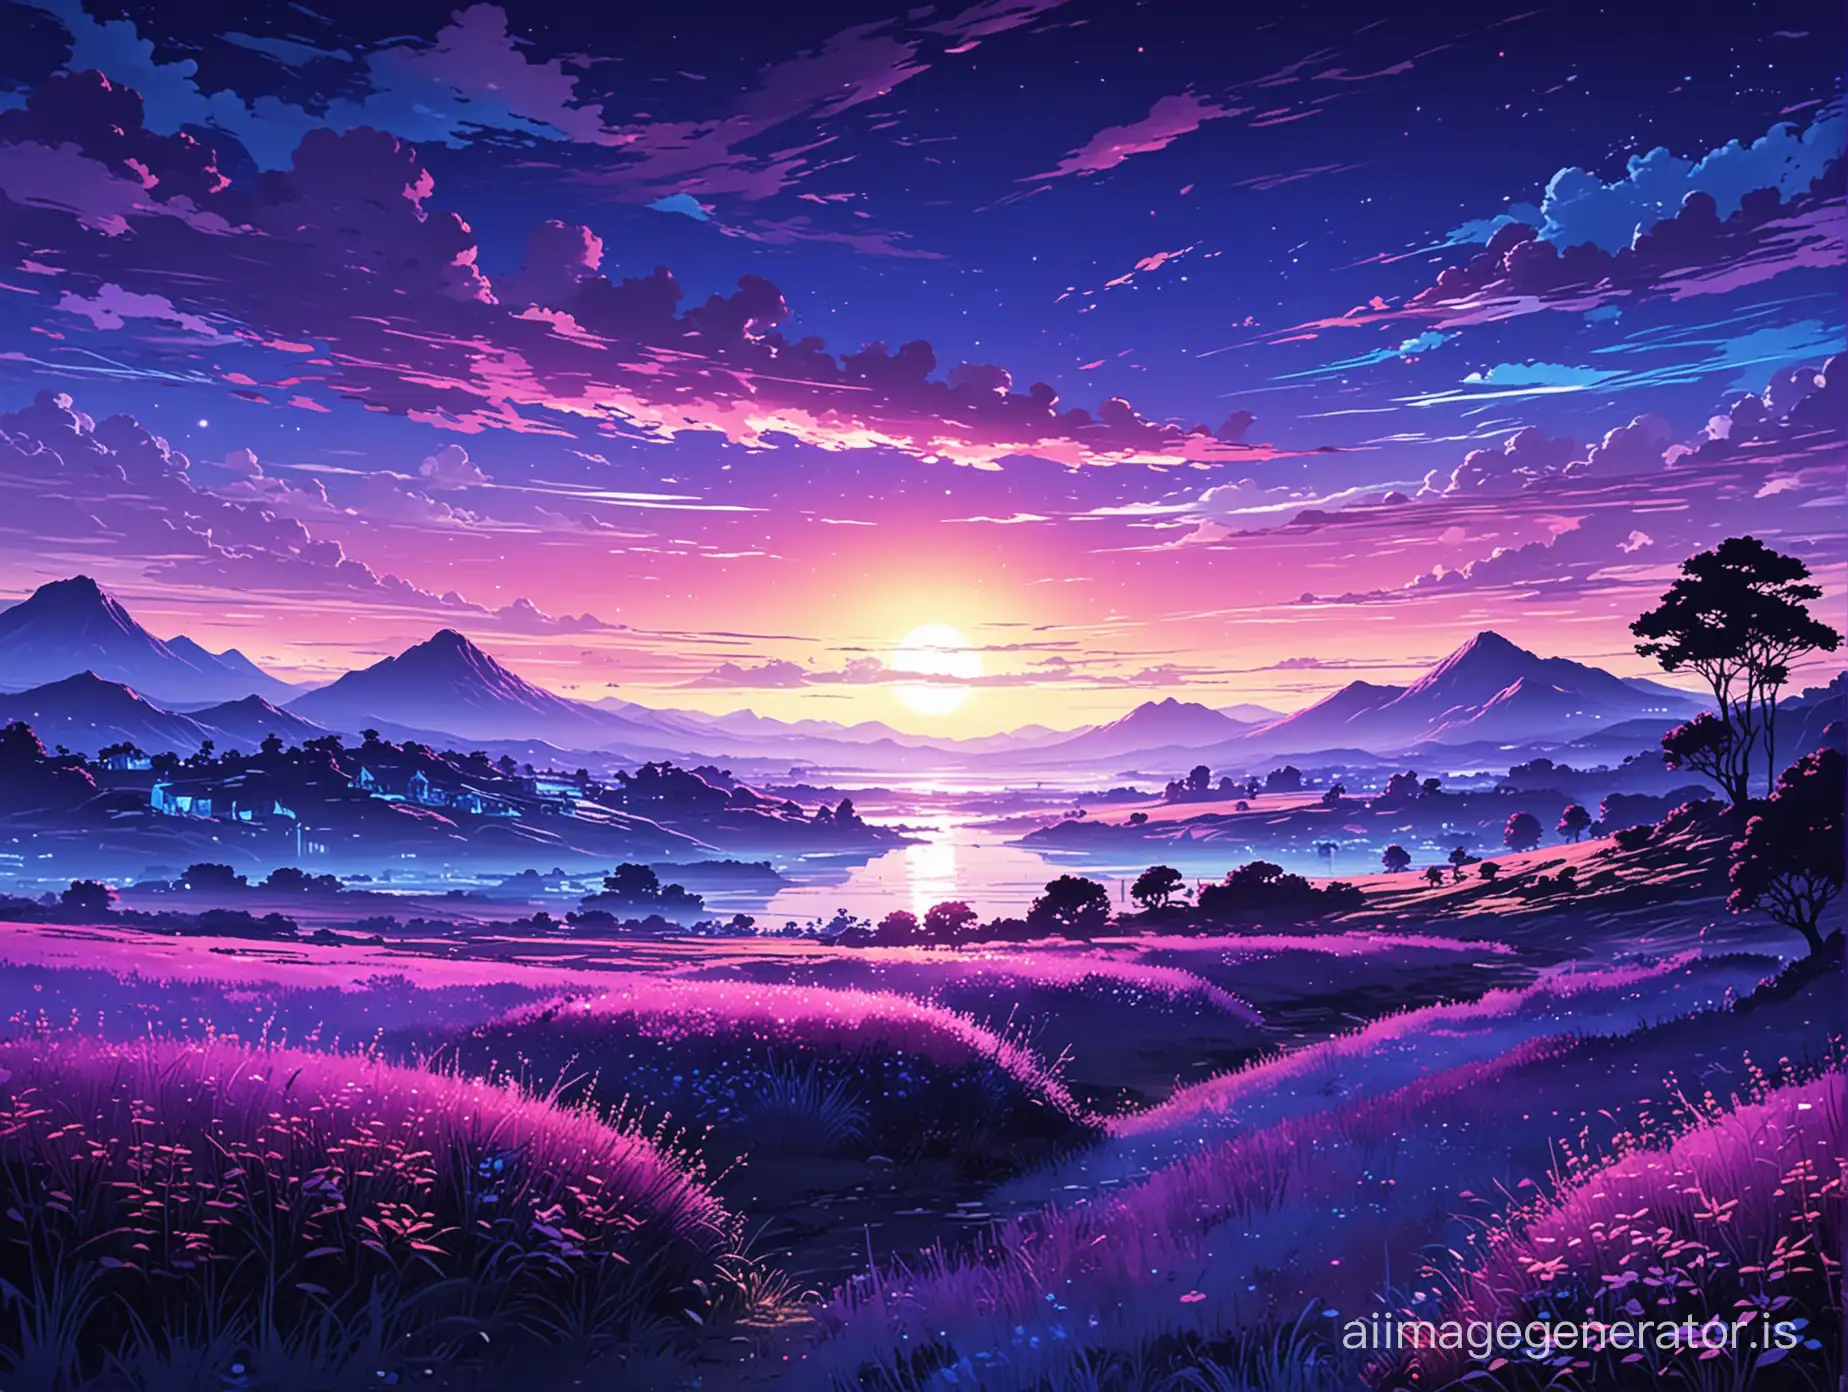 Vibrant-Purple-and-Blue-Anime-Landscape-at-Dusk